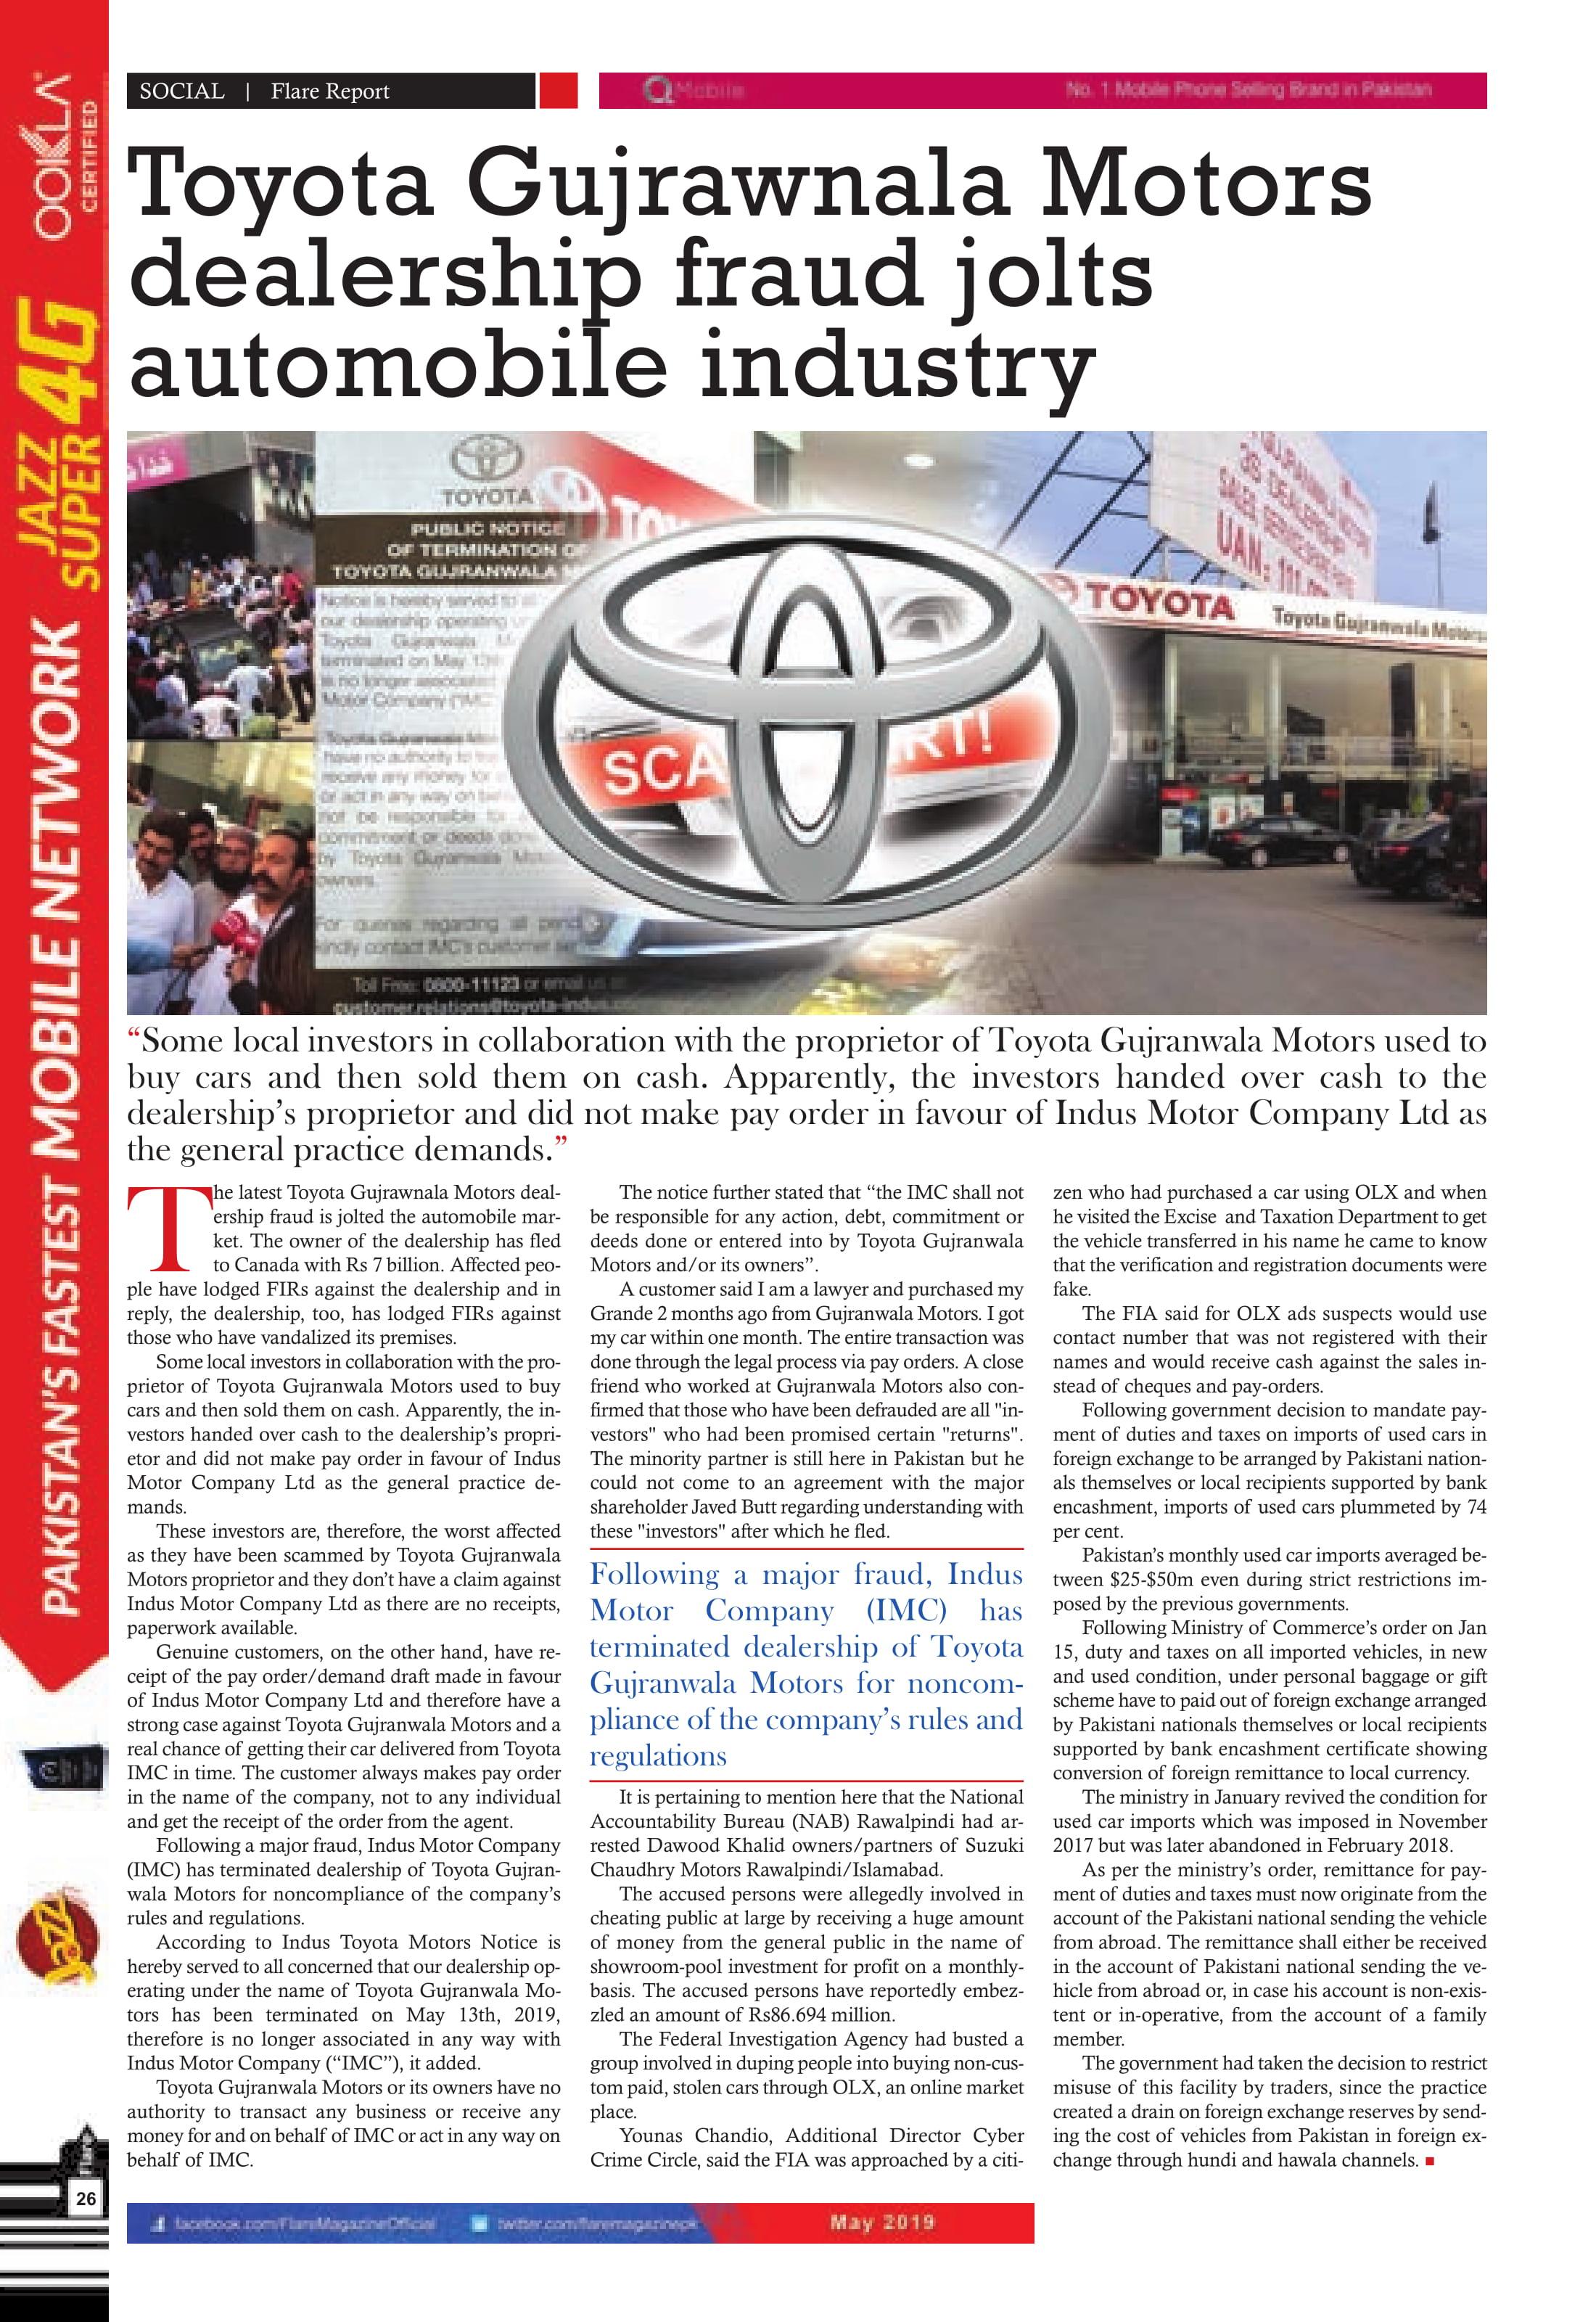 Toyota Gujrawnala Motors dealership fraud jolts automobile industry